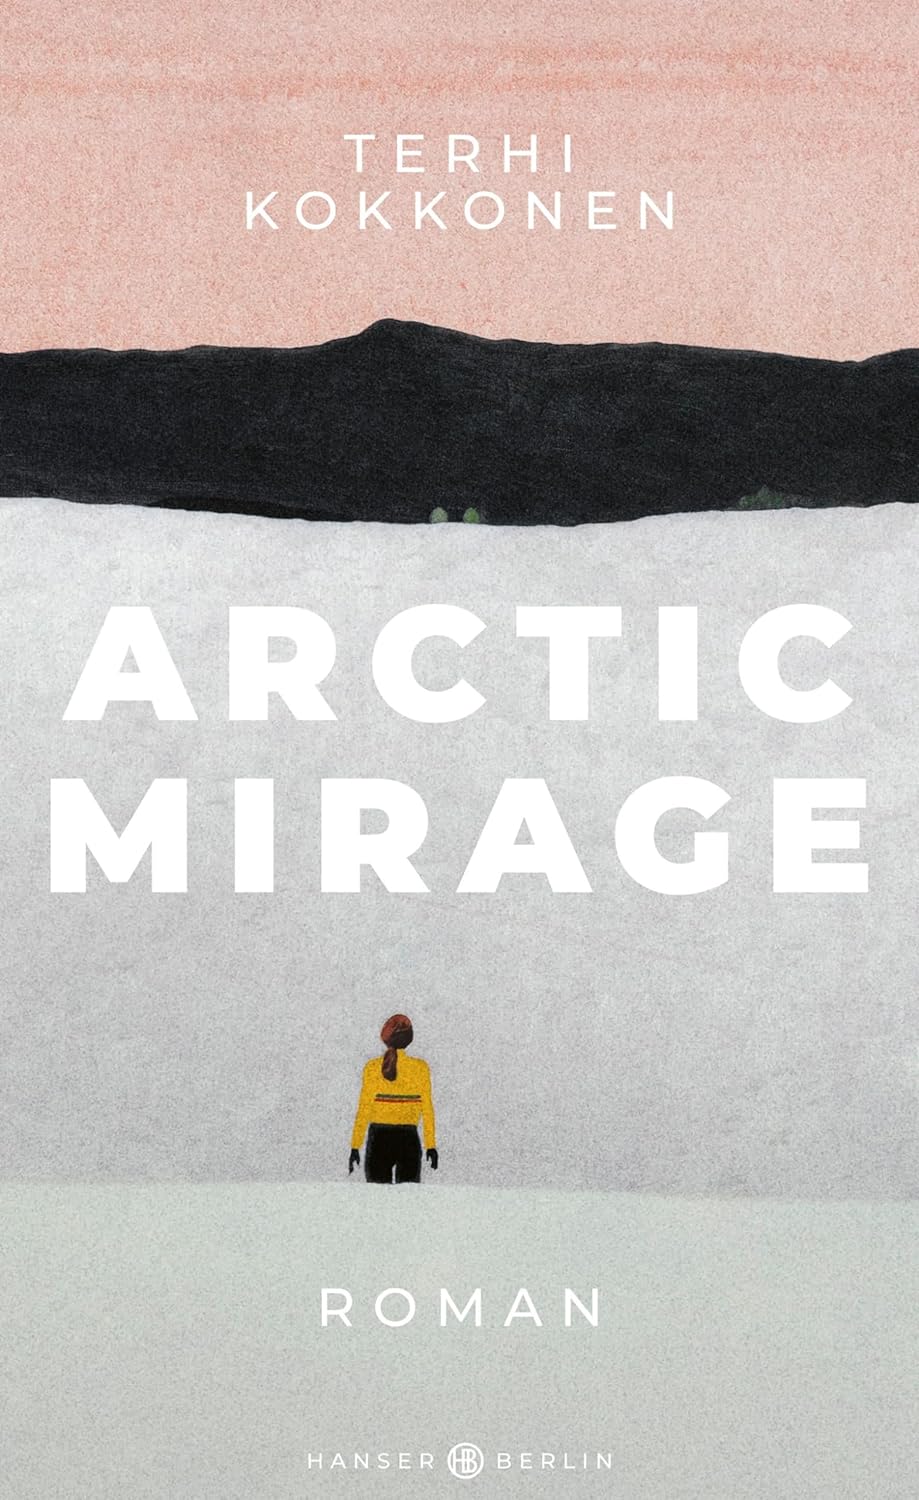 #
„Arctic Mirage“ von Terhi Kokkonen